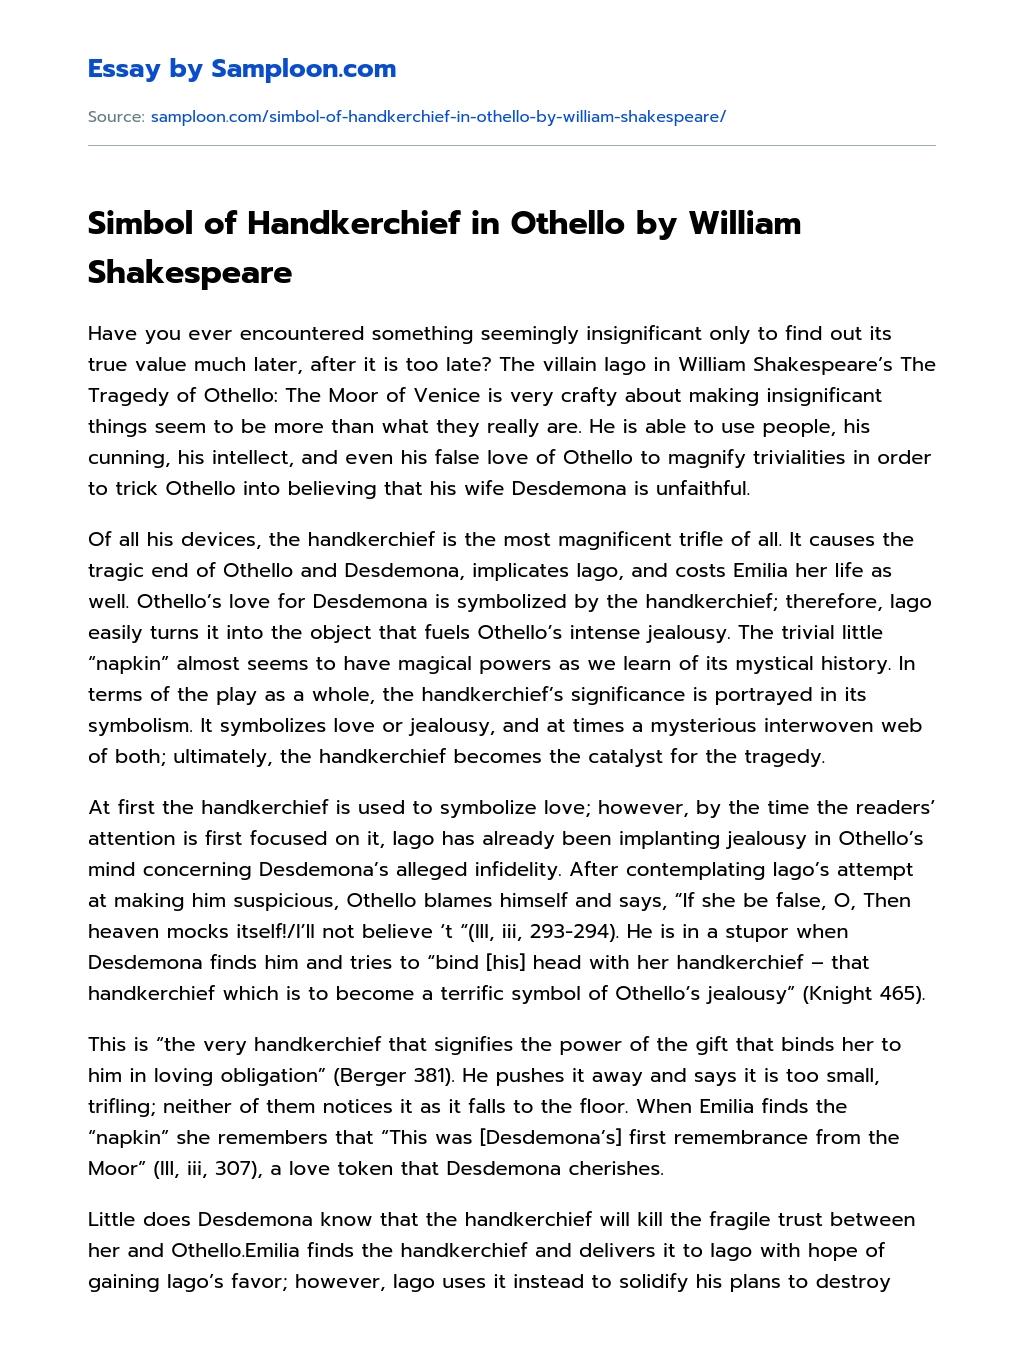 Simbol of Handkerchief in Othello by William Shakespeare essay